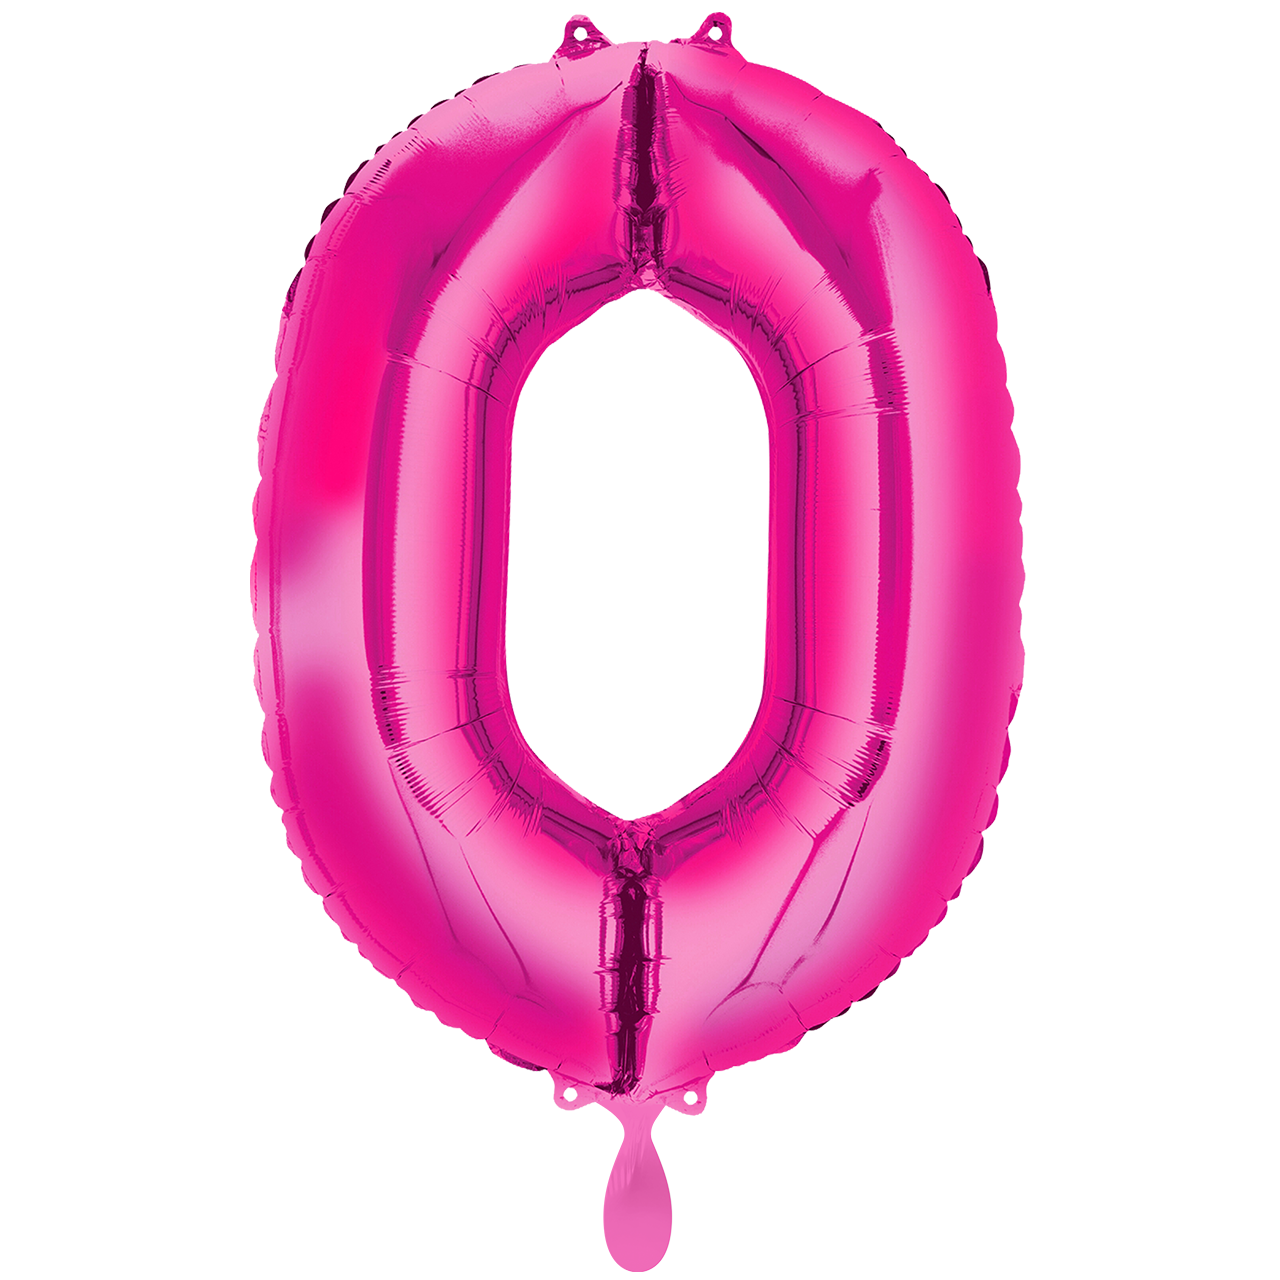 Vorschau: 1 Ballon XXL - Zahl 0 - Pink